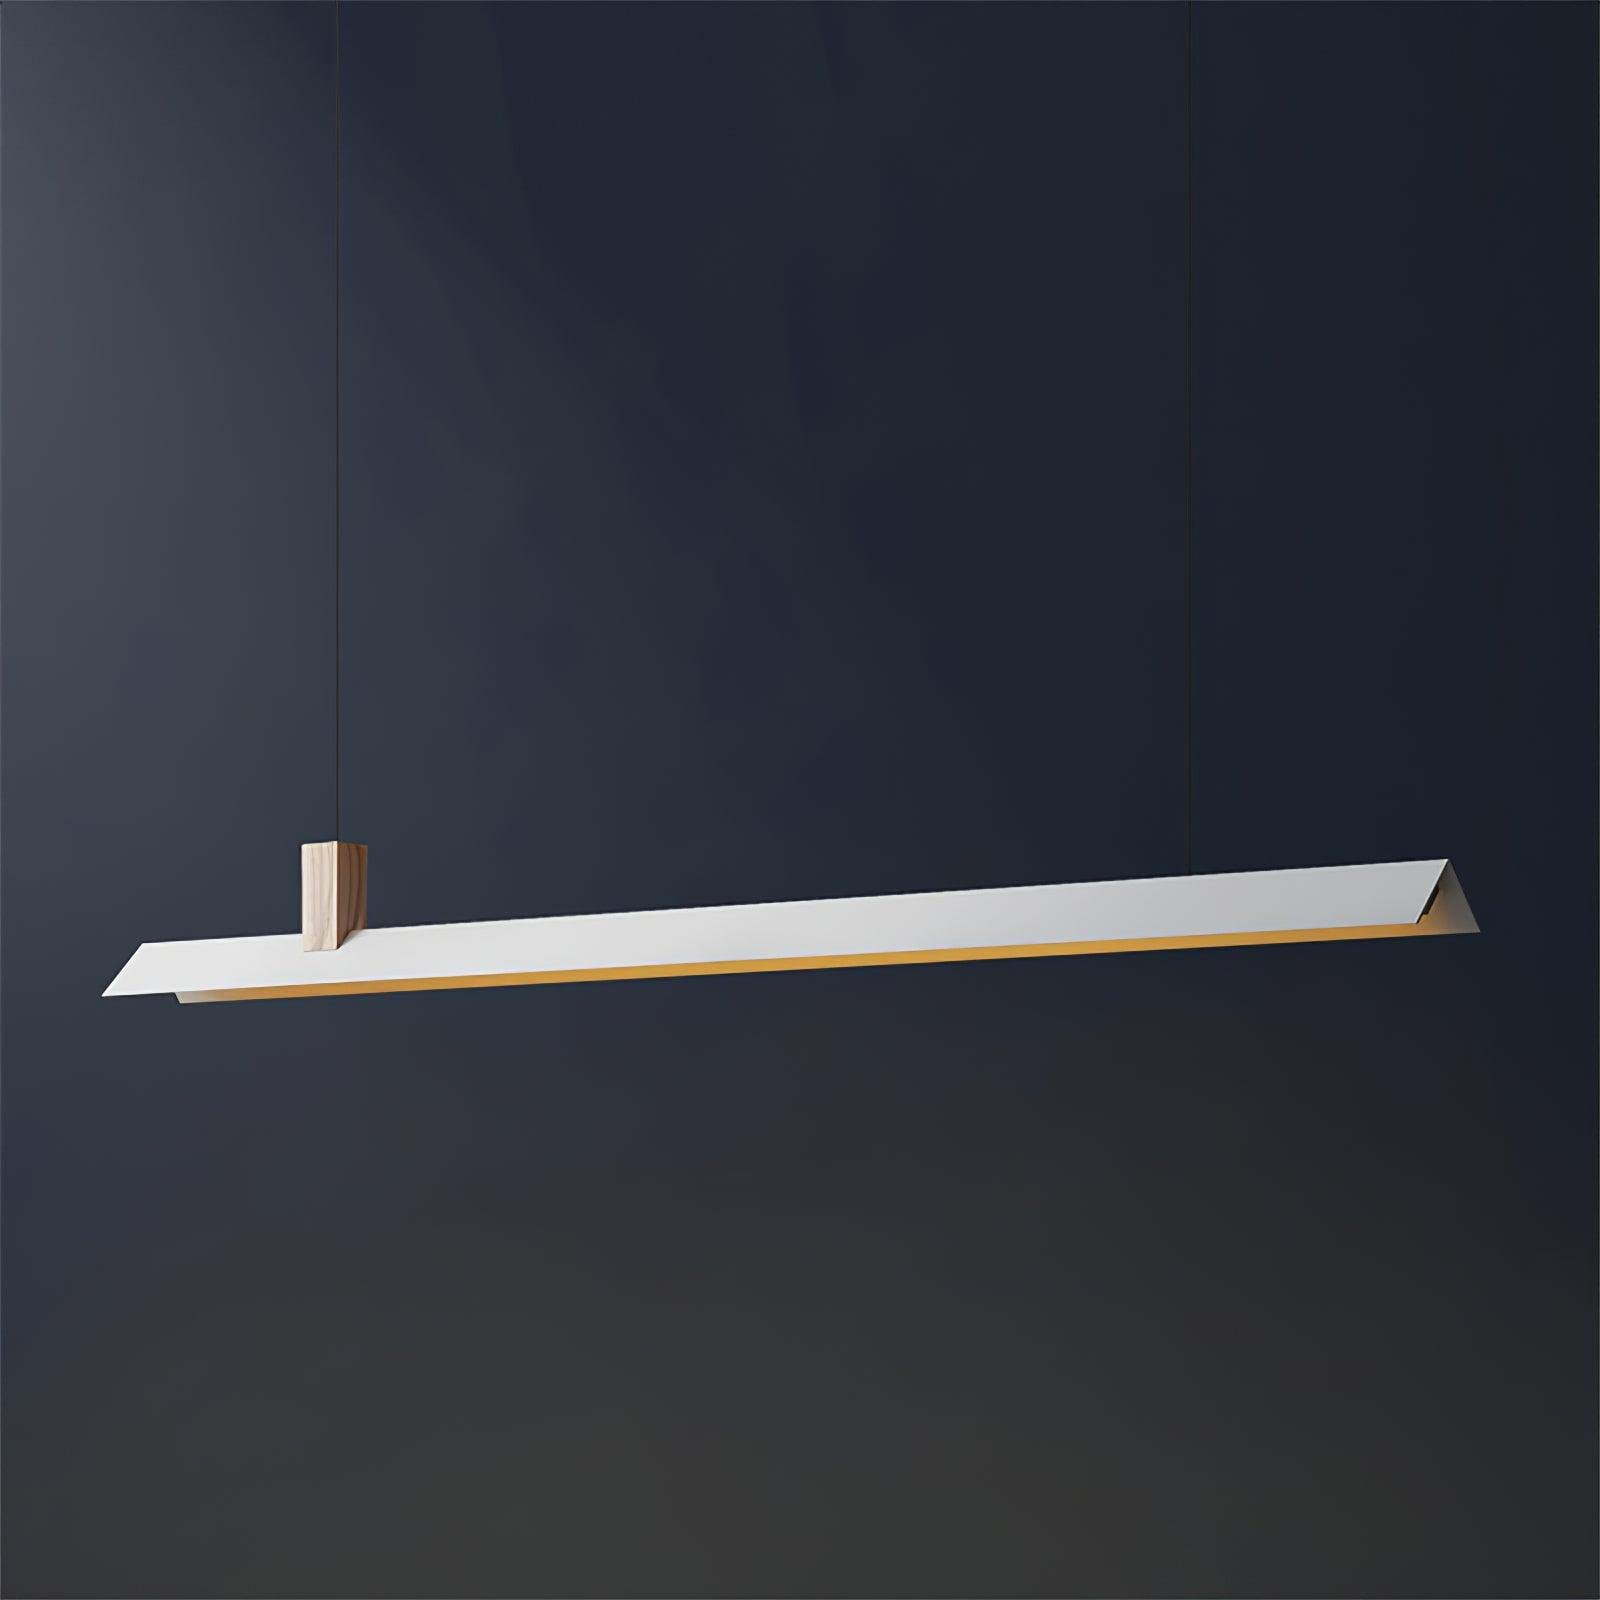 Axis T Pendant Light in Cool White, 100cm x 11cm x 150cm (39.4" x 4.3" x 59")